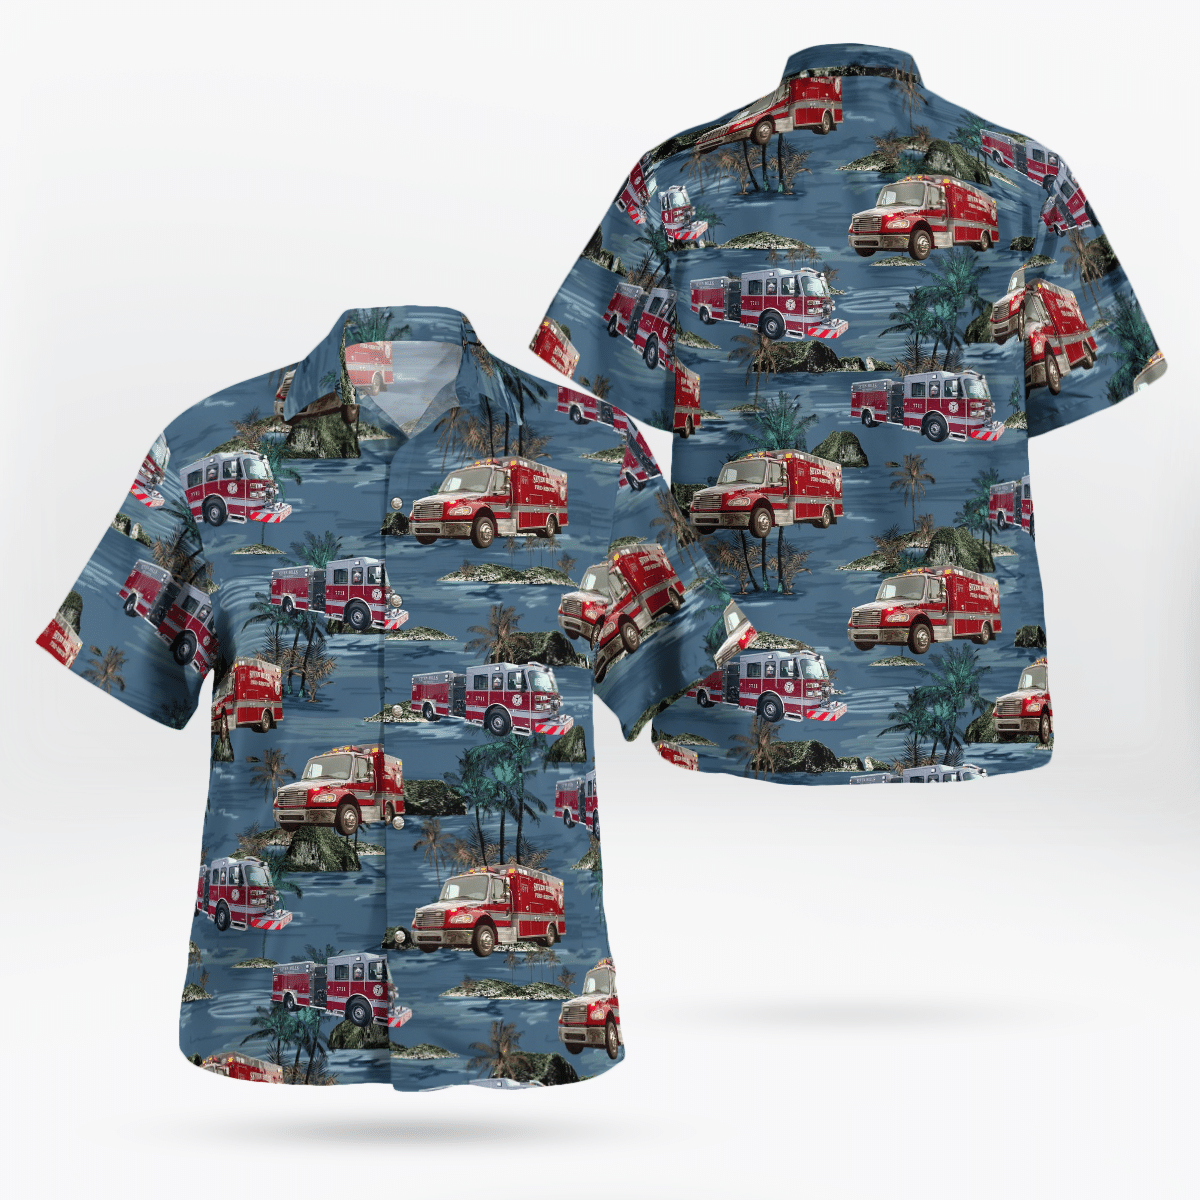 Why don't you order Hot Hawaiian Shirt today? 15